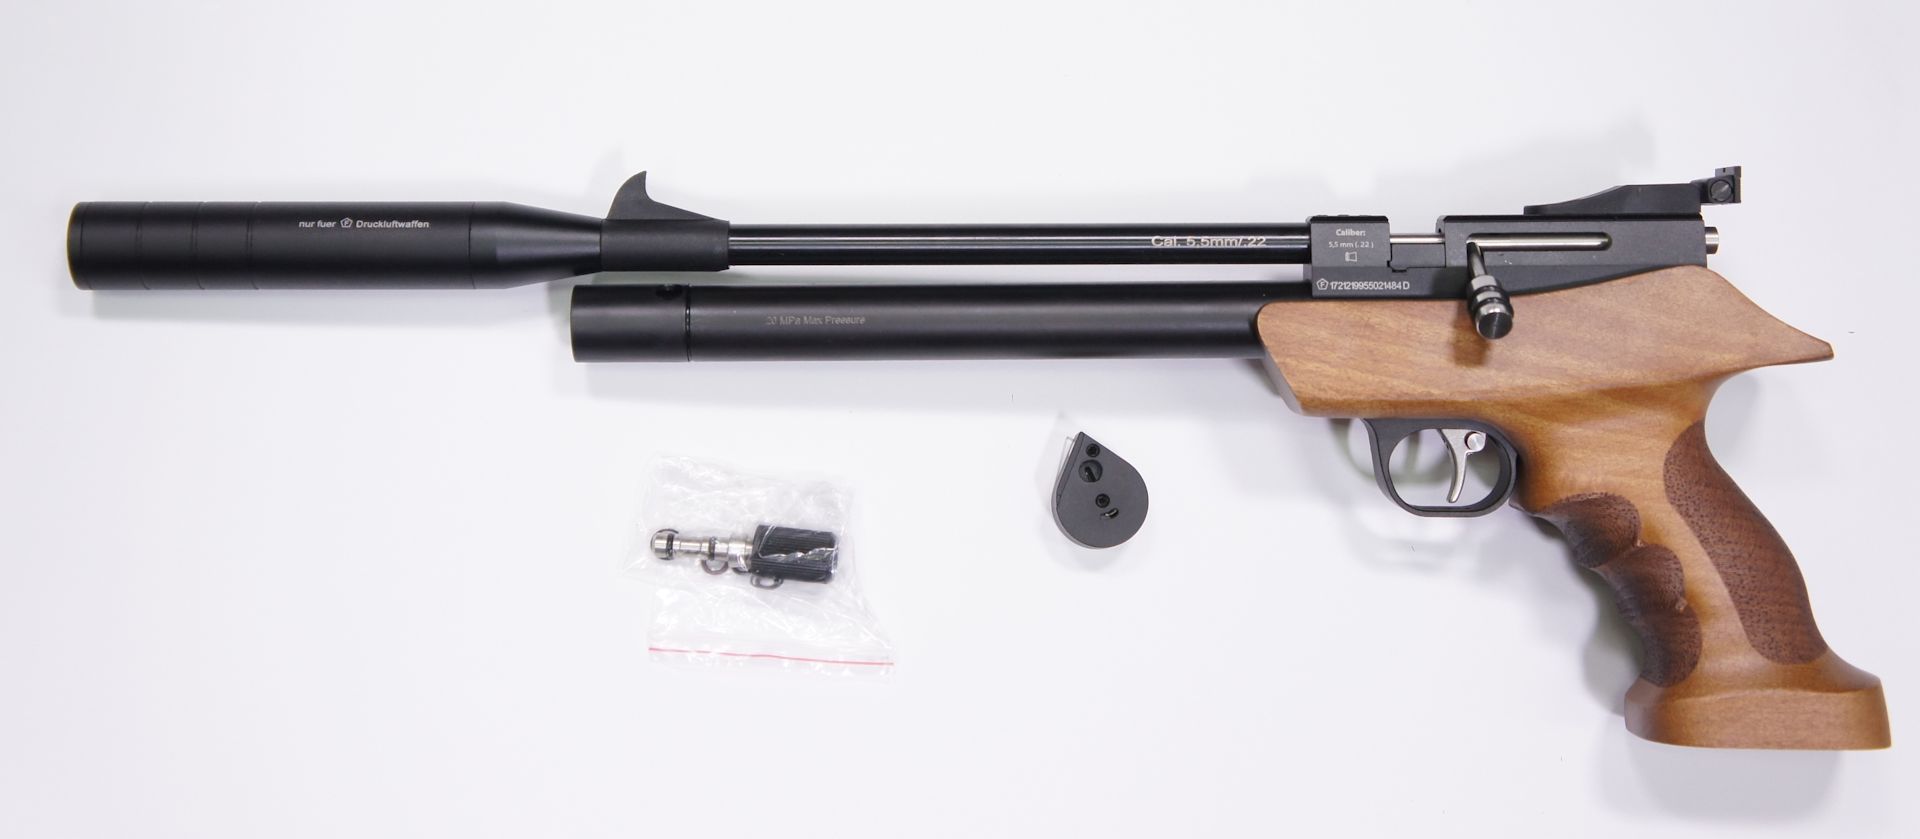 Repetier- Luftpistole Diana Bandit im Kaliber 5,5mm, mit Regulator